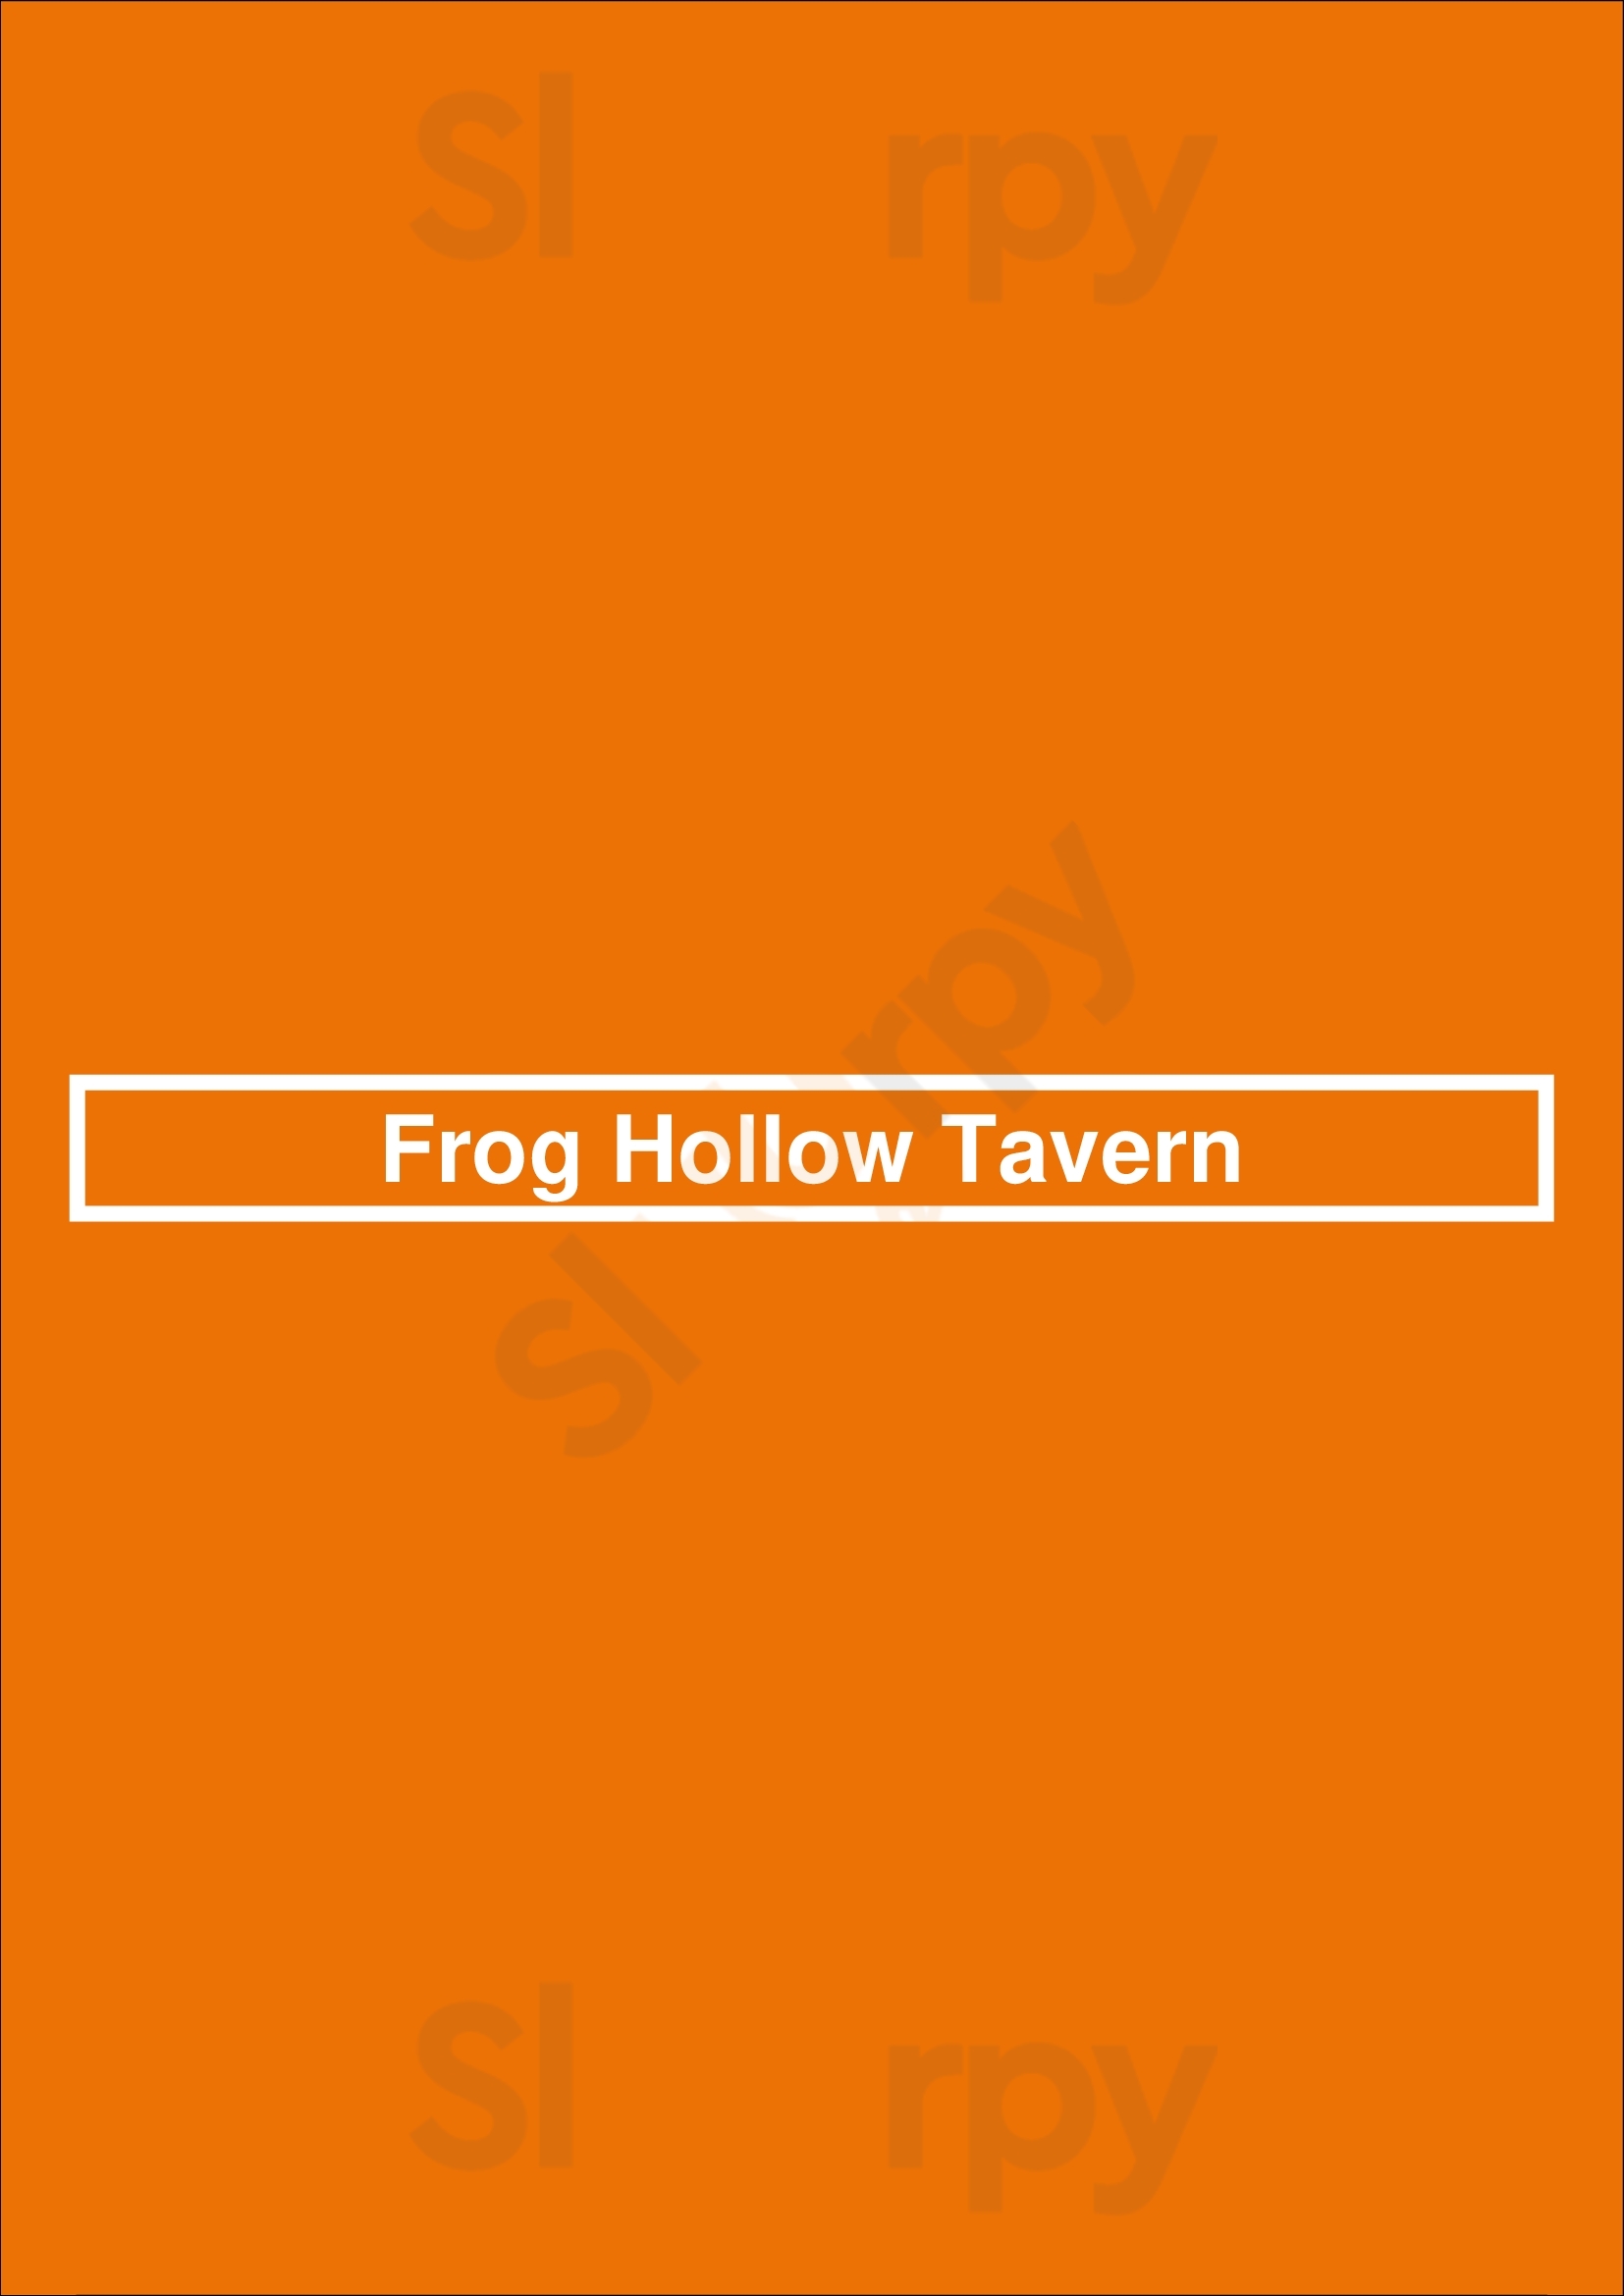 Frog Hollow Tavern Augusta Menu - 1